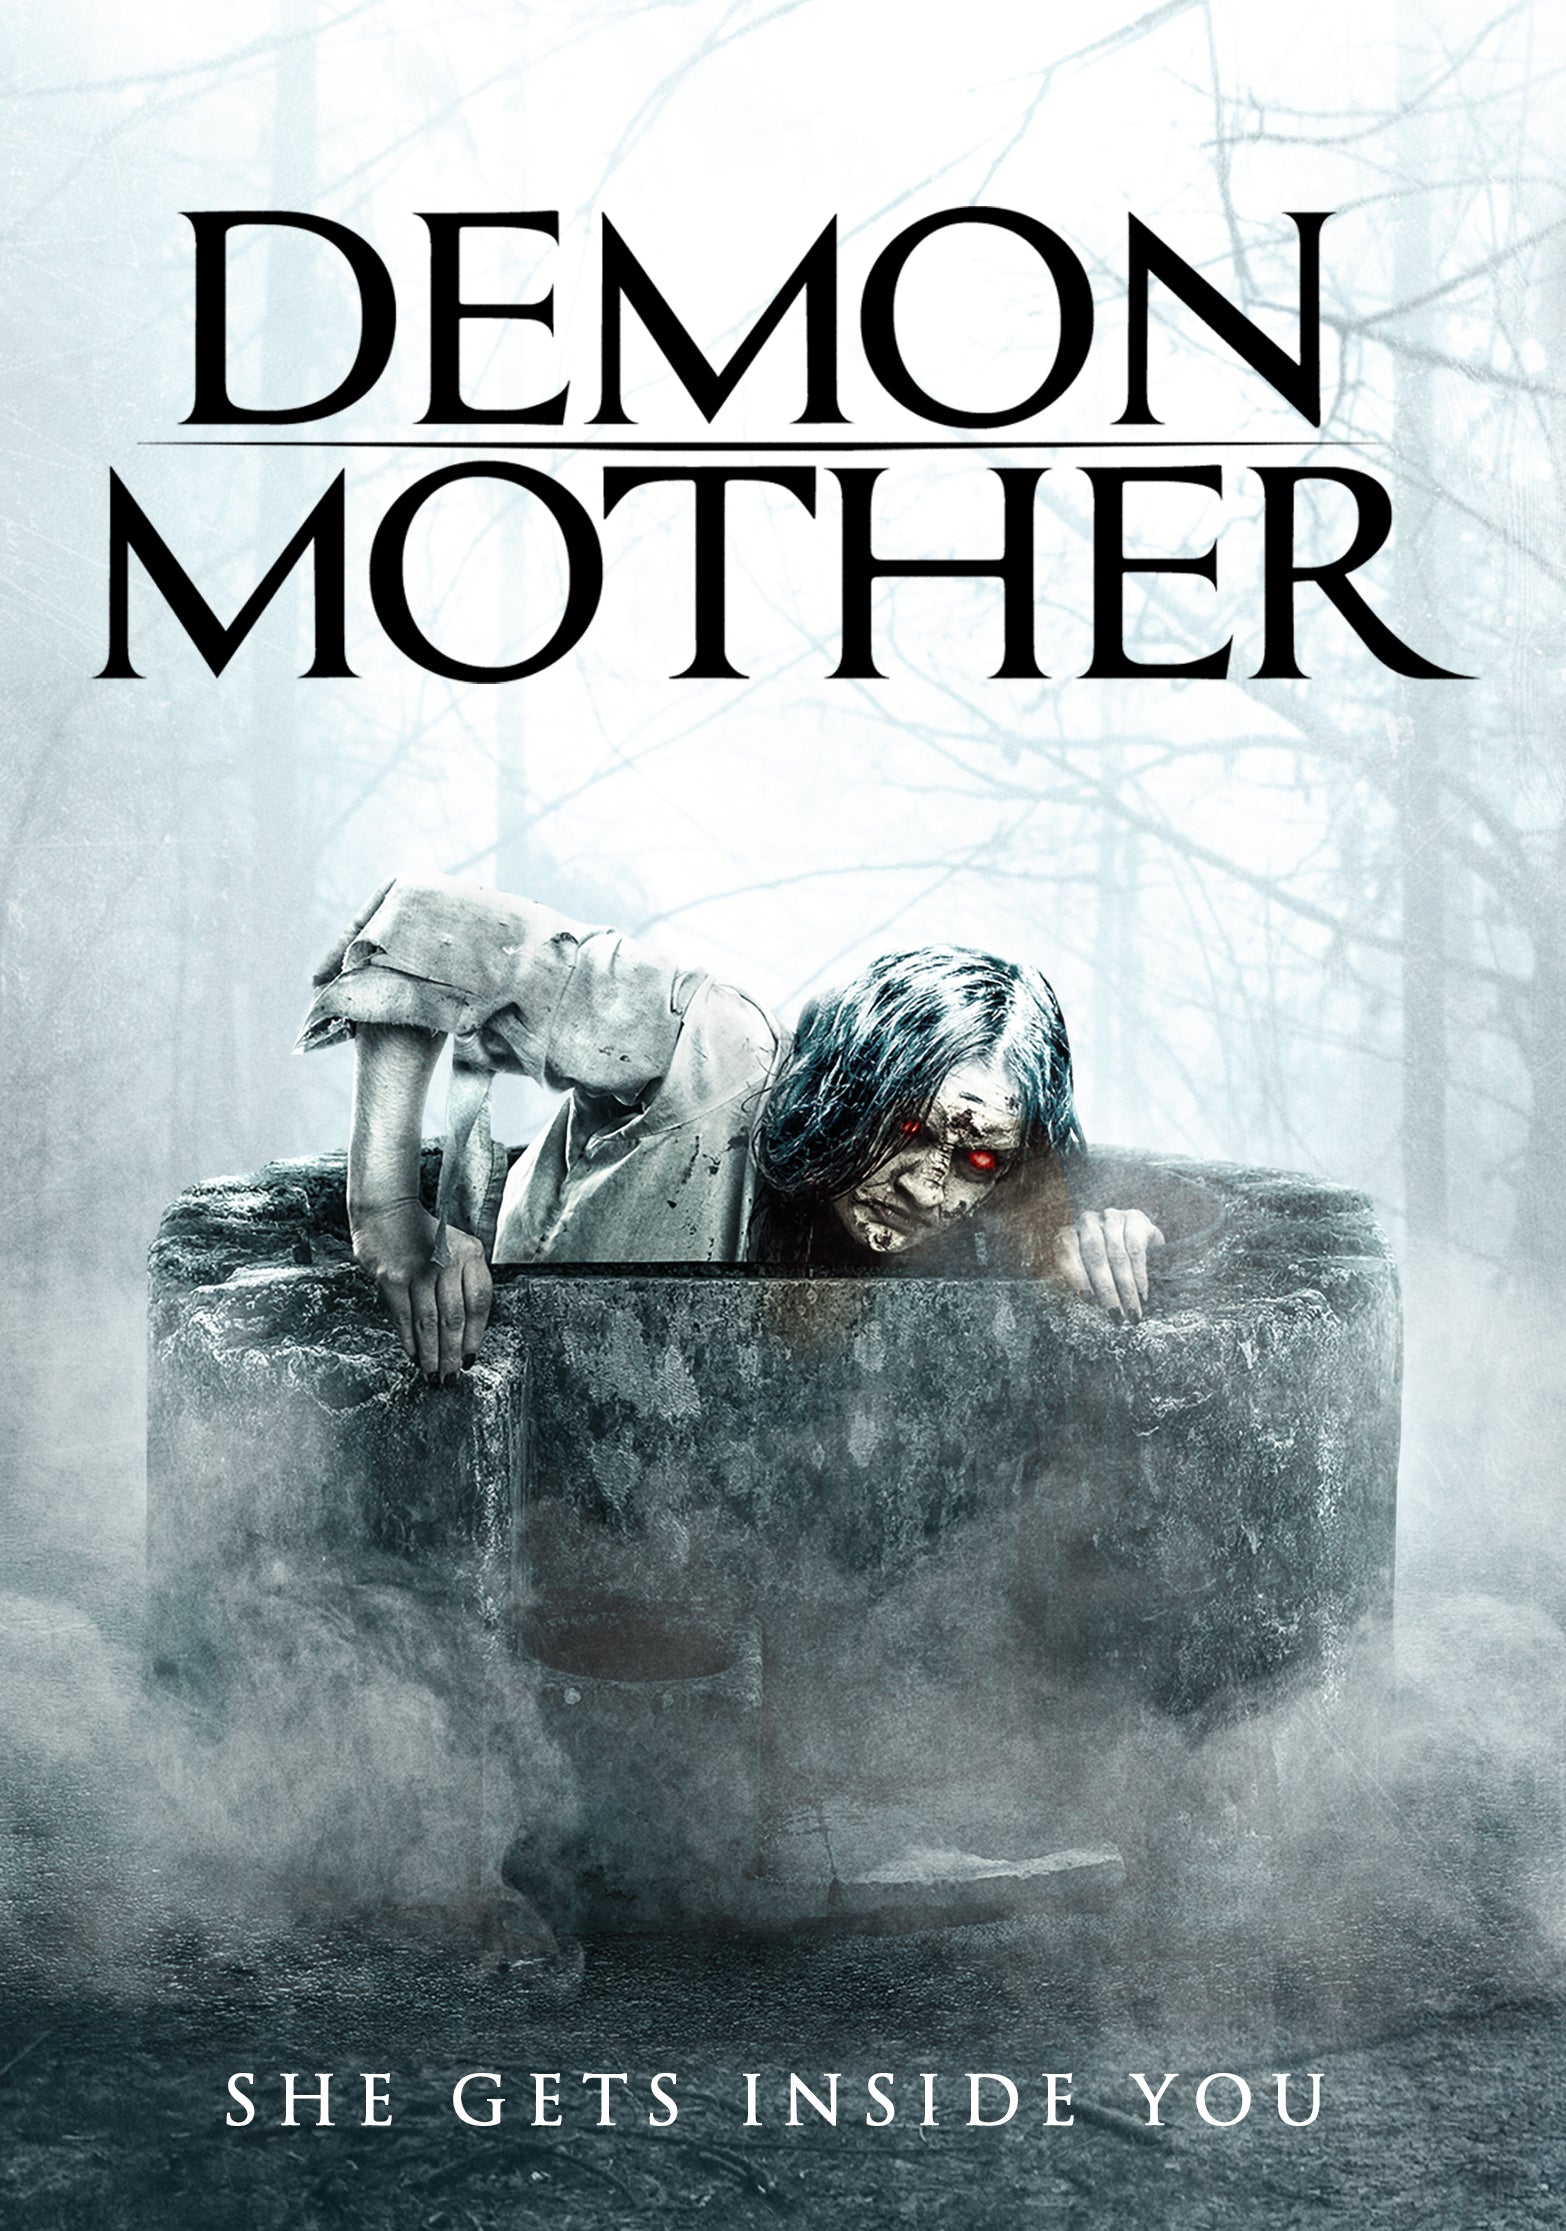 DEMON MOTHER DVD